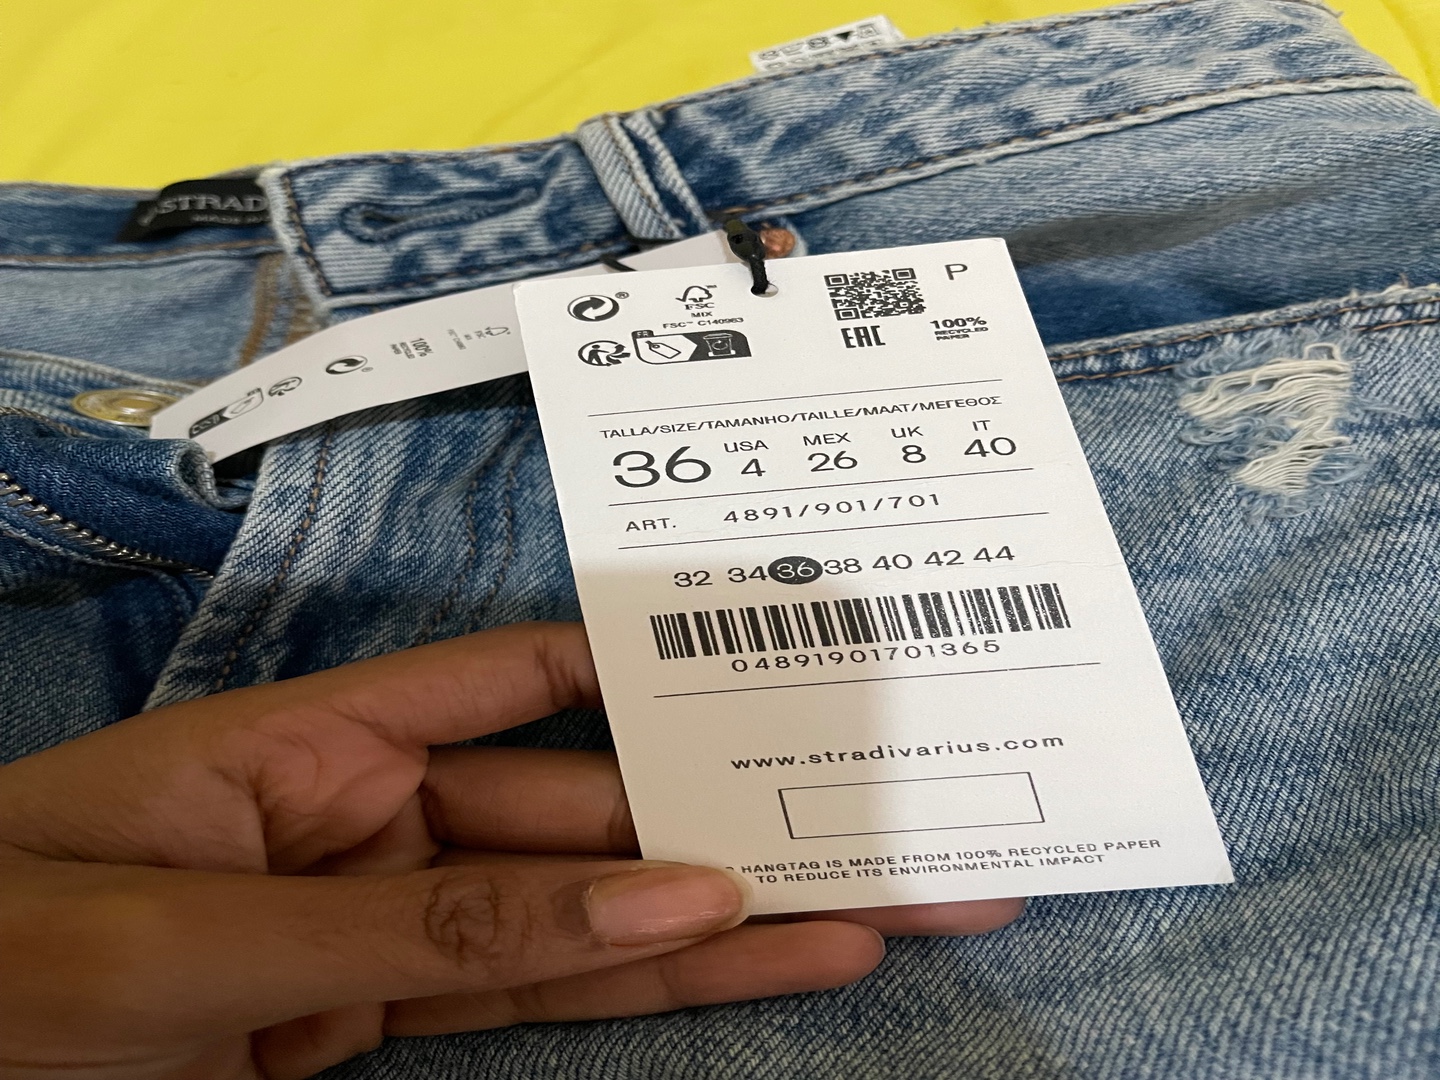 ropa para mujer - Pantalón mon jean marca stradivarius nuevo size m (36) 1